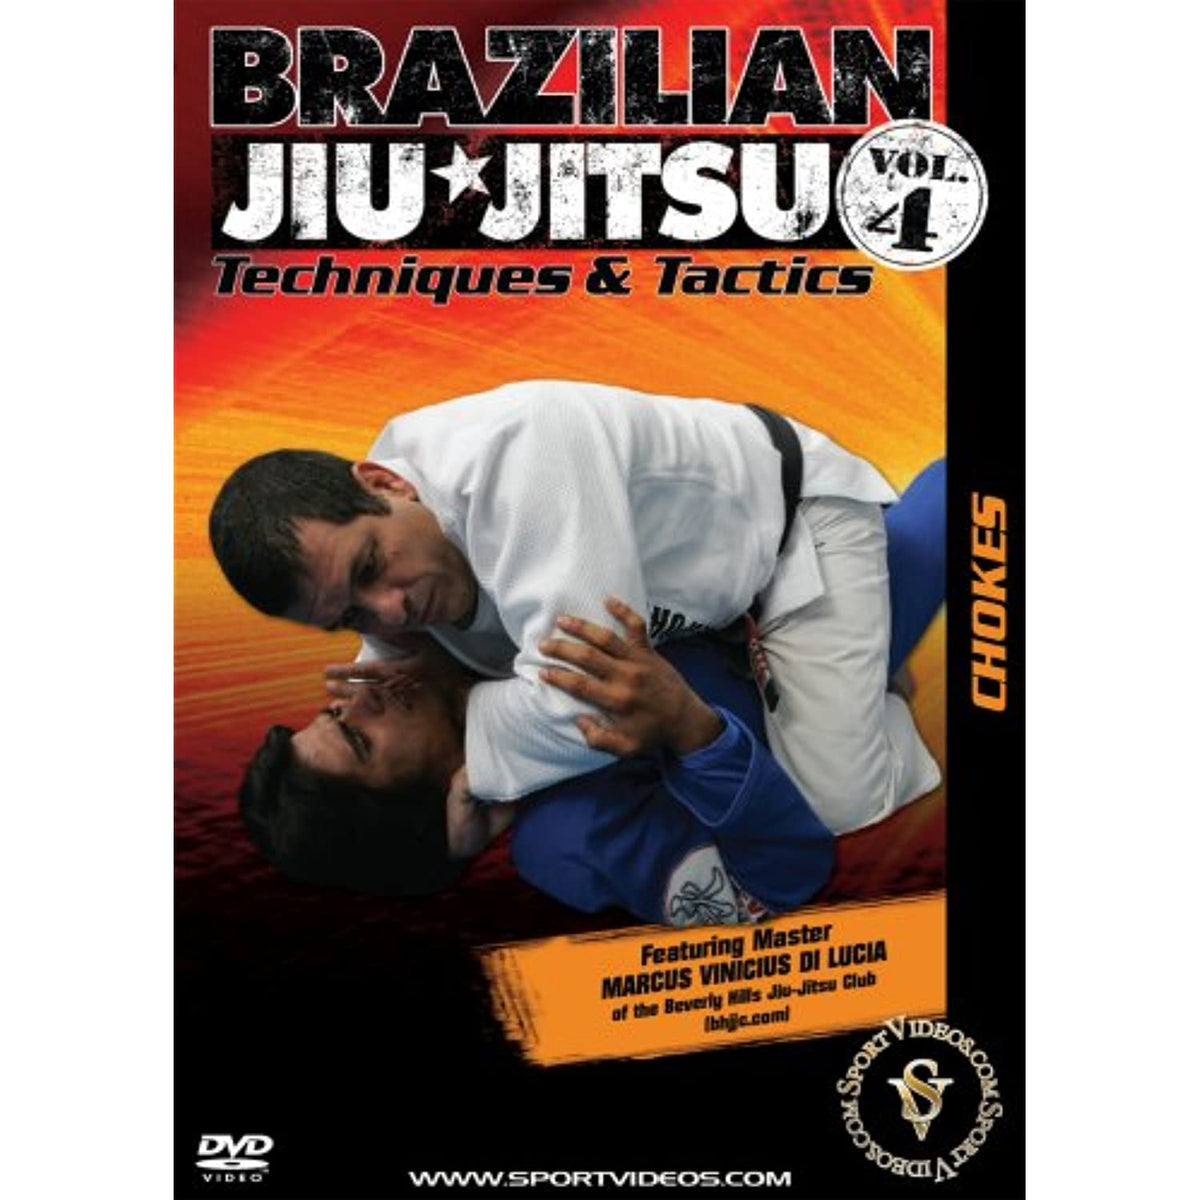 Brazilian Jiu-Jitsu Techniques Tactics Vol.4 Chokes DVD NTSC Reg 1] - New  Sealed - Attic Discovery Shop